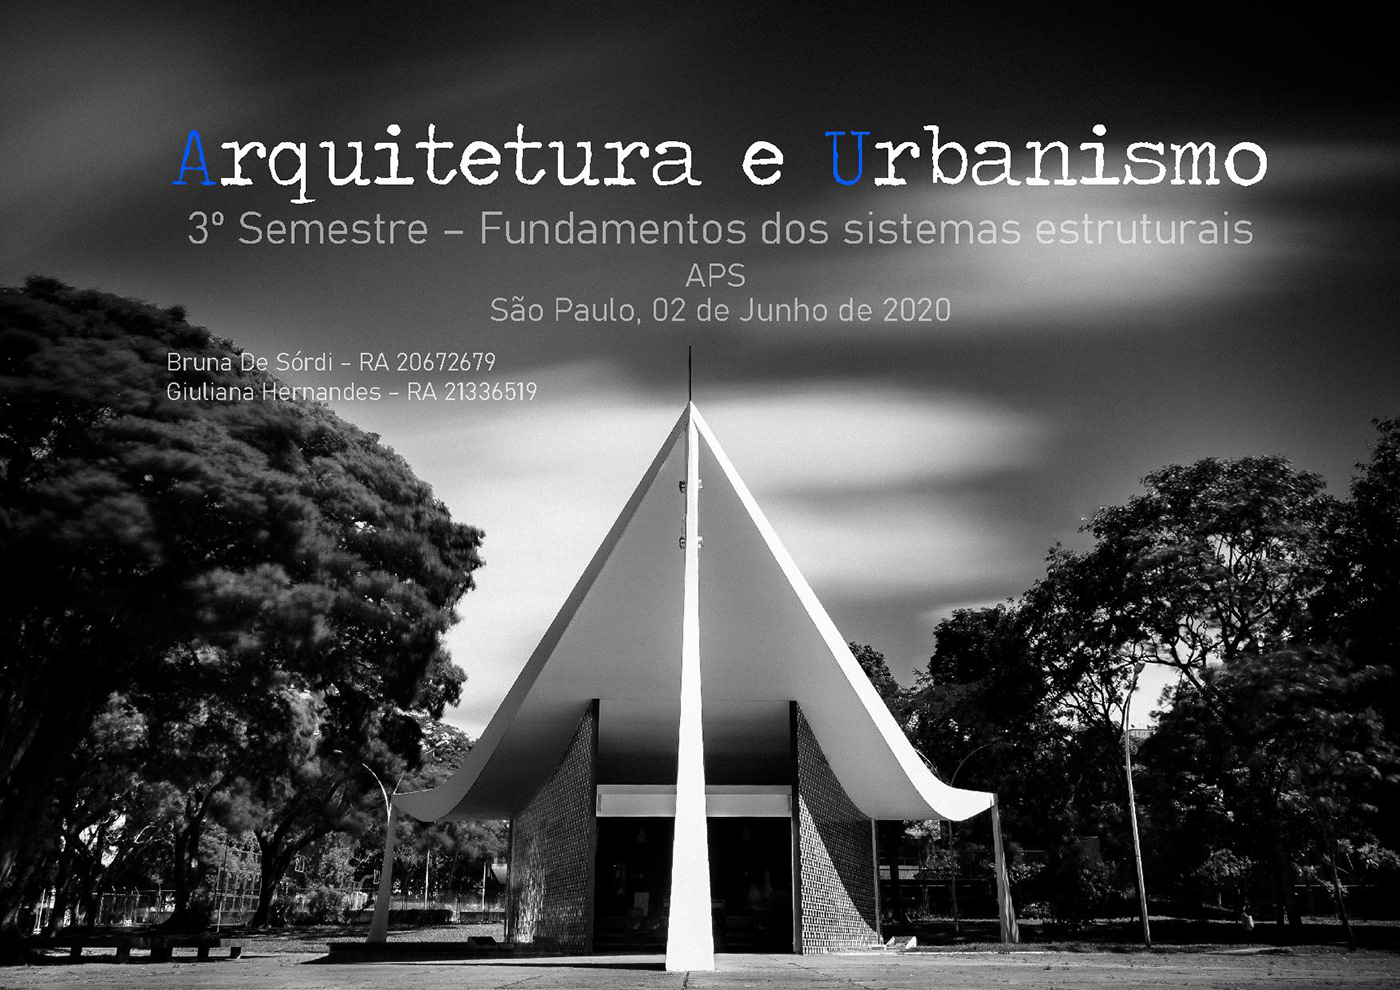 ARQUITETURA arquiteturaeurbanismo brasilia calculo calculoestrutural Engenharia oscarniemeyer seminario